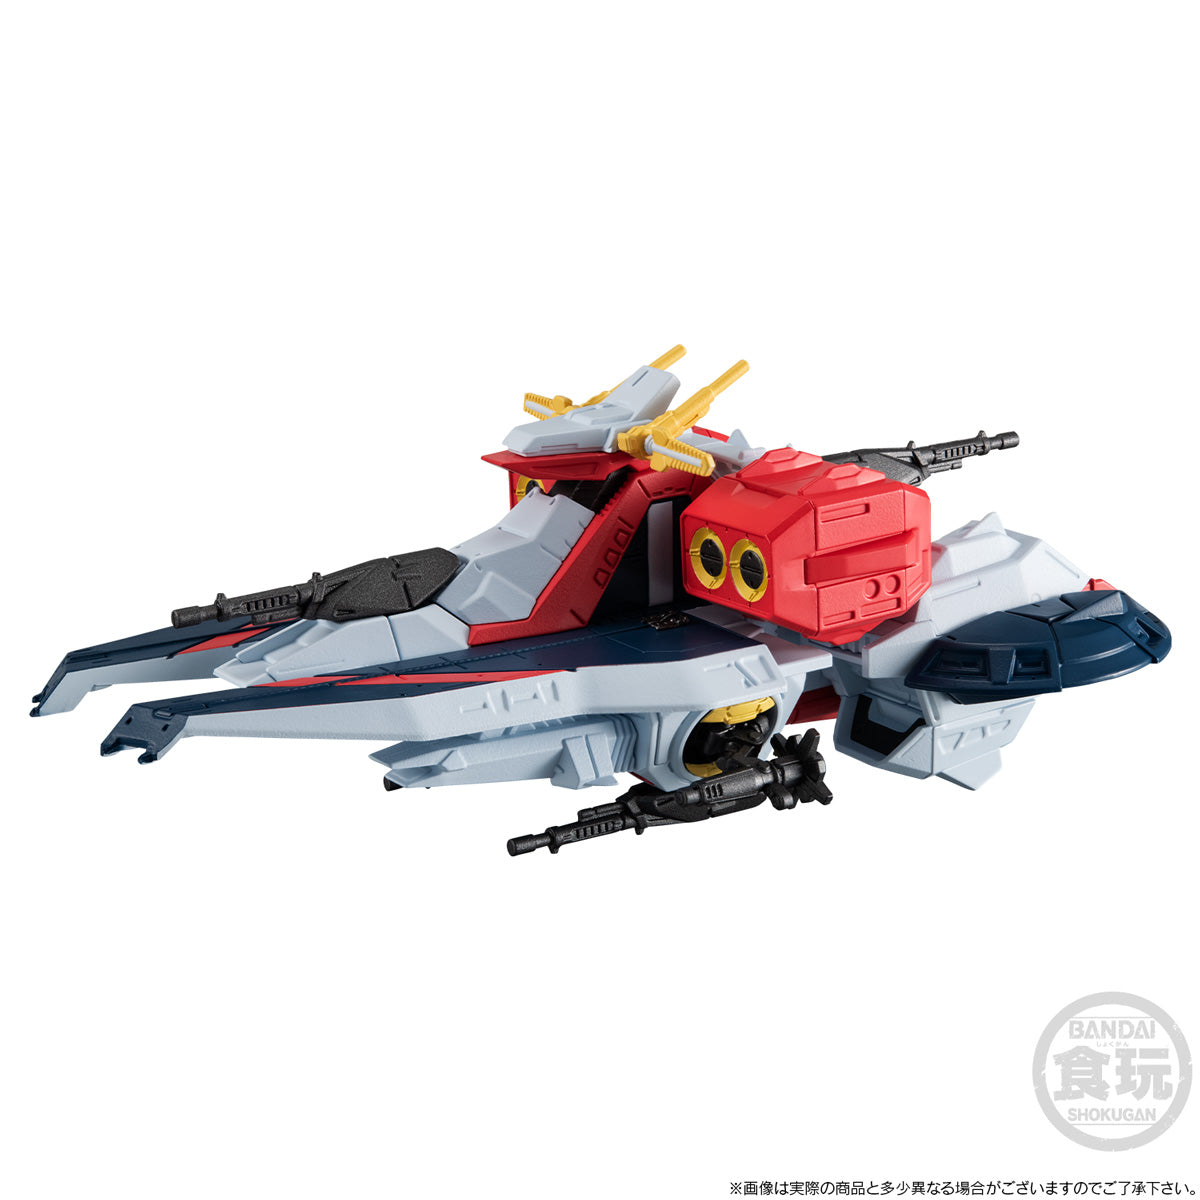 Bandai - Shokugan - Mobile Suit Gundam - FW Gundam Converge SB - Argama Class Assault Landing Ship Nikaya - Marvelous Toys